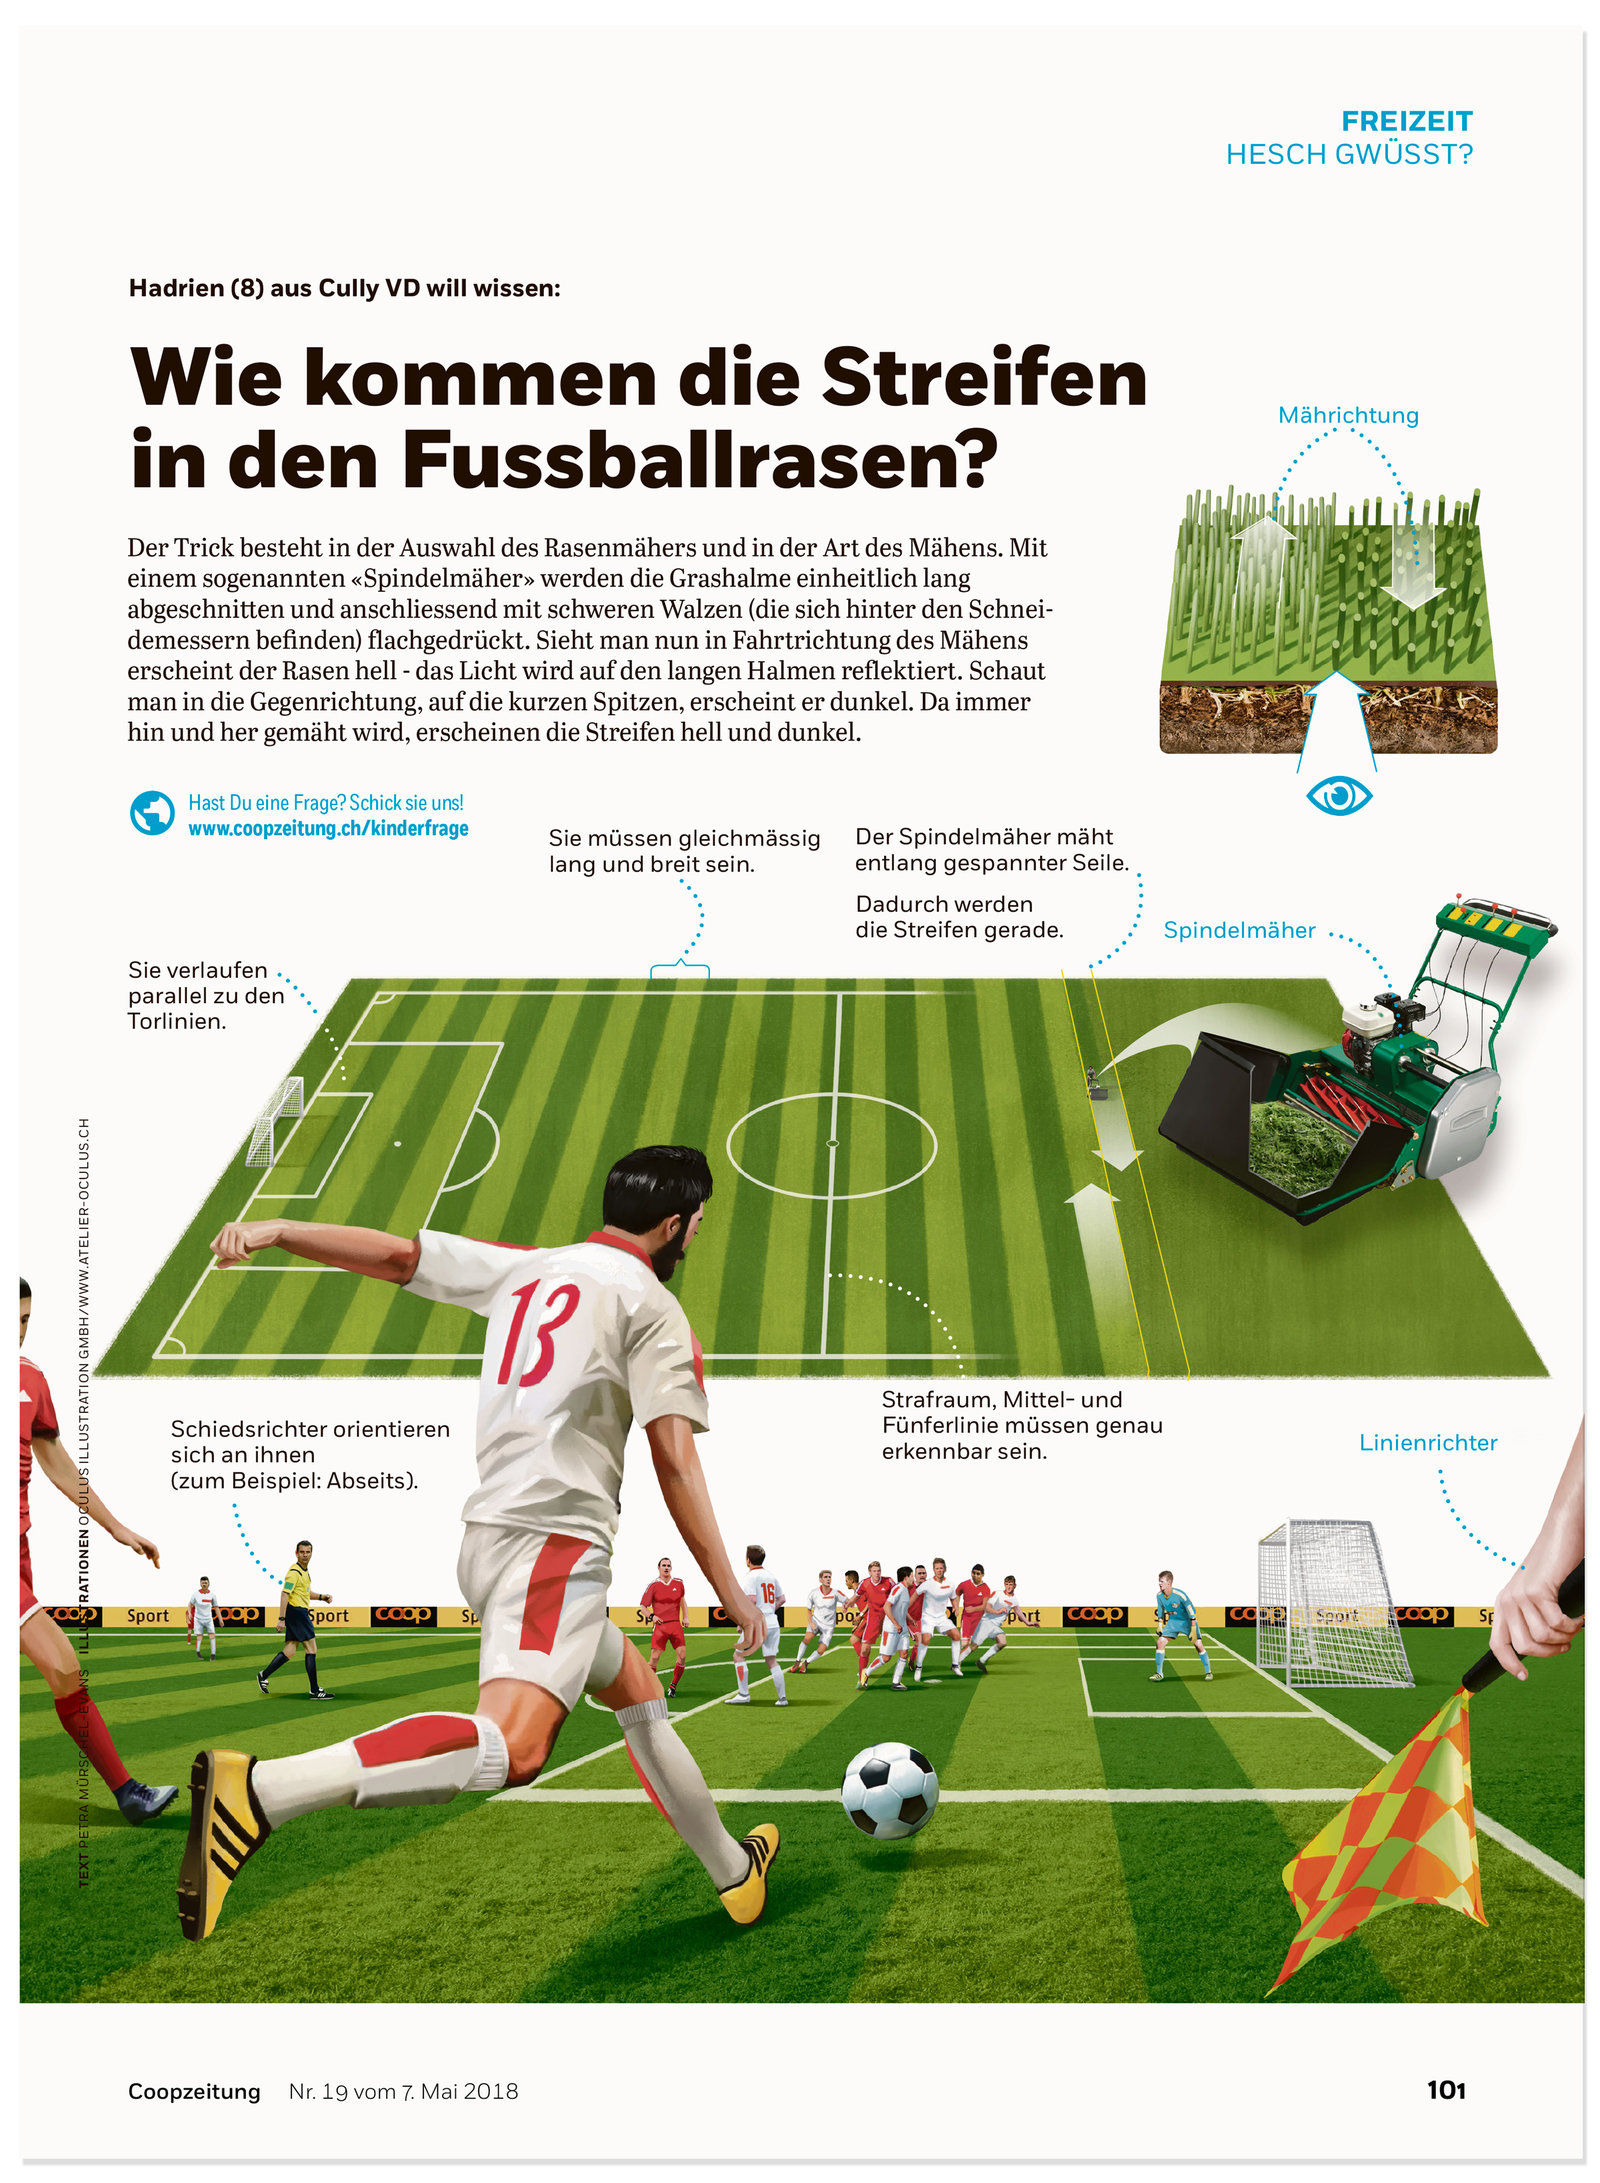 oculus-illustration-coopzeitung-hesch-gwuesst-fussballrasen